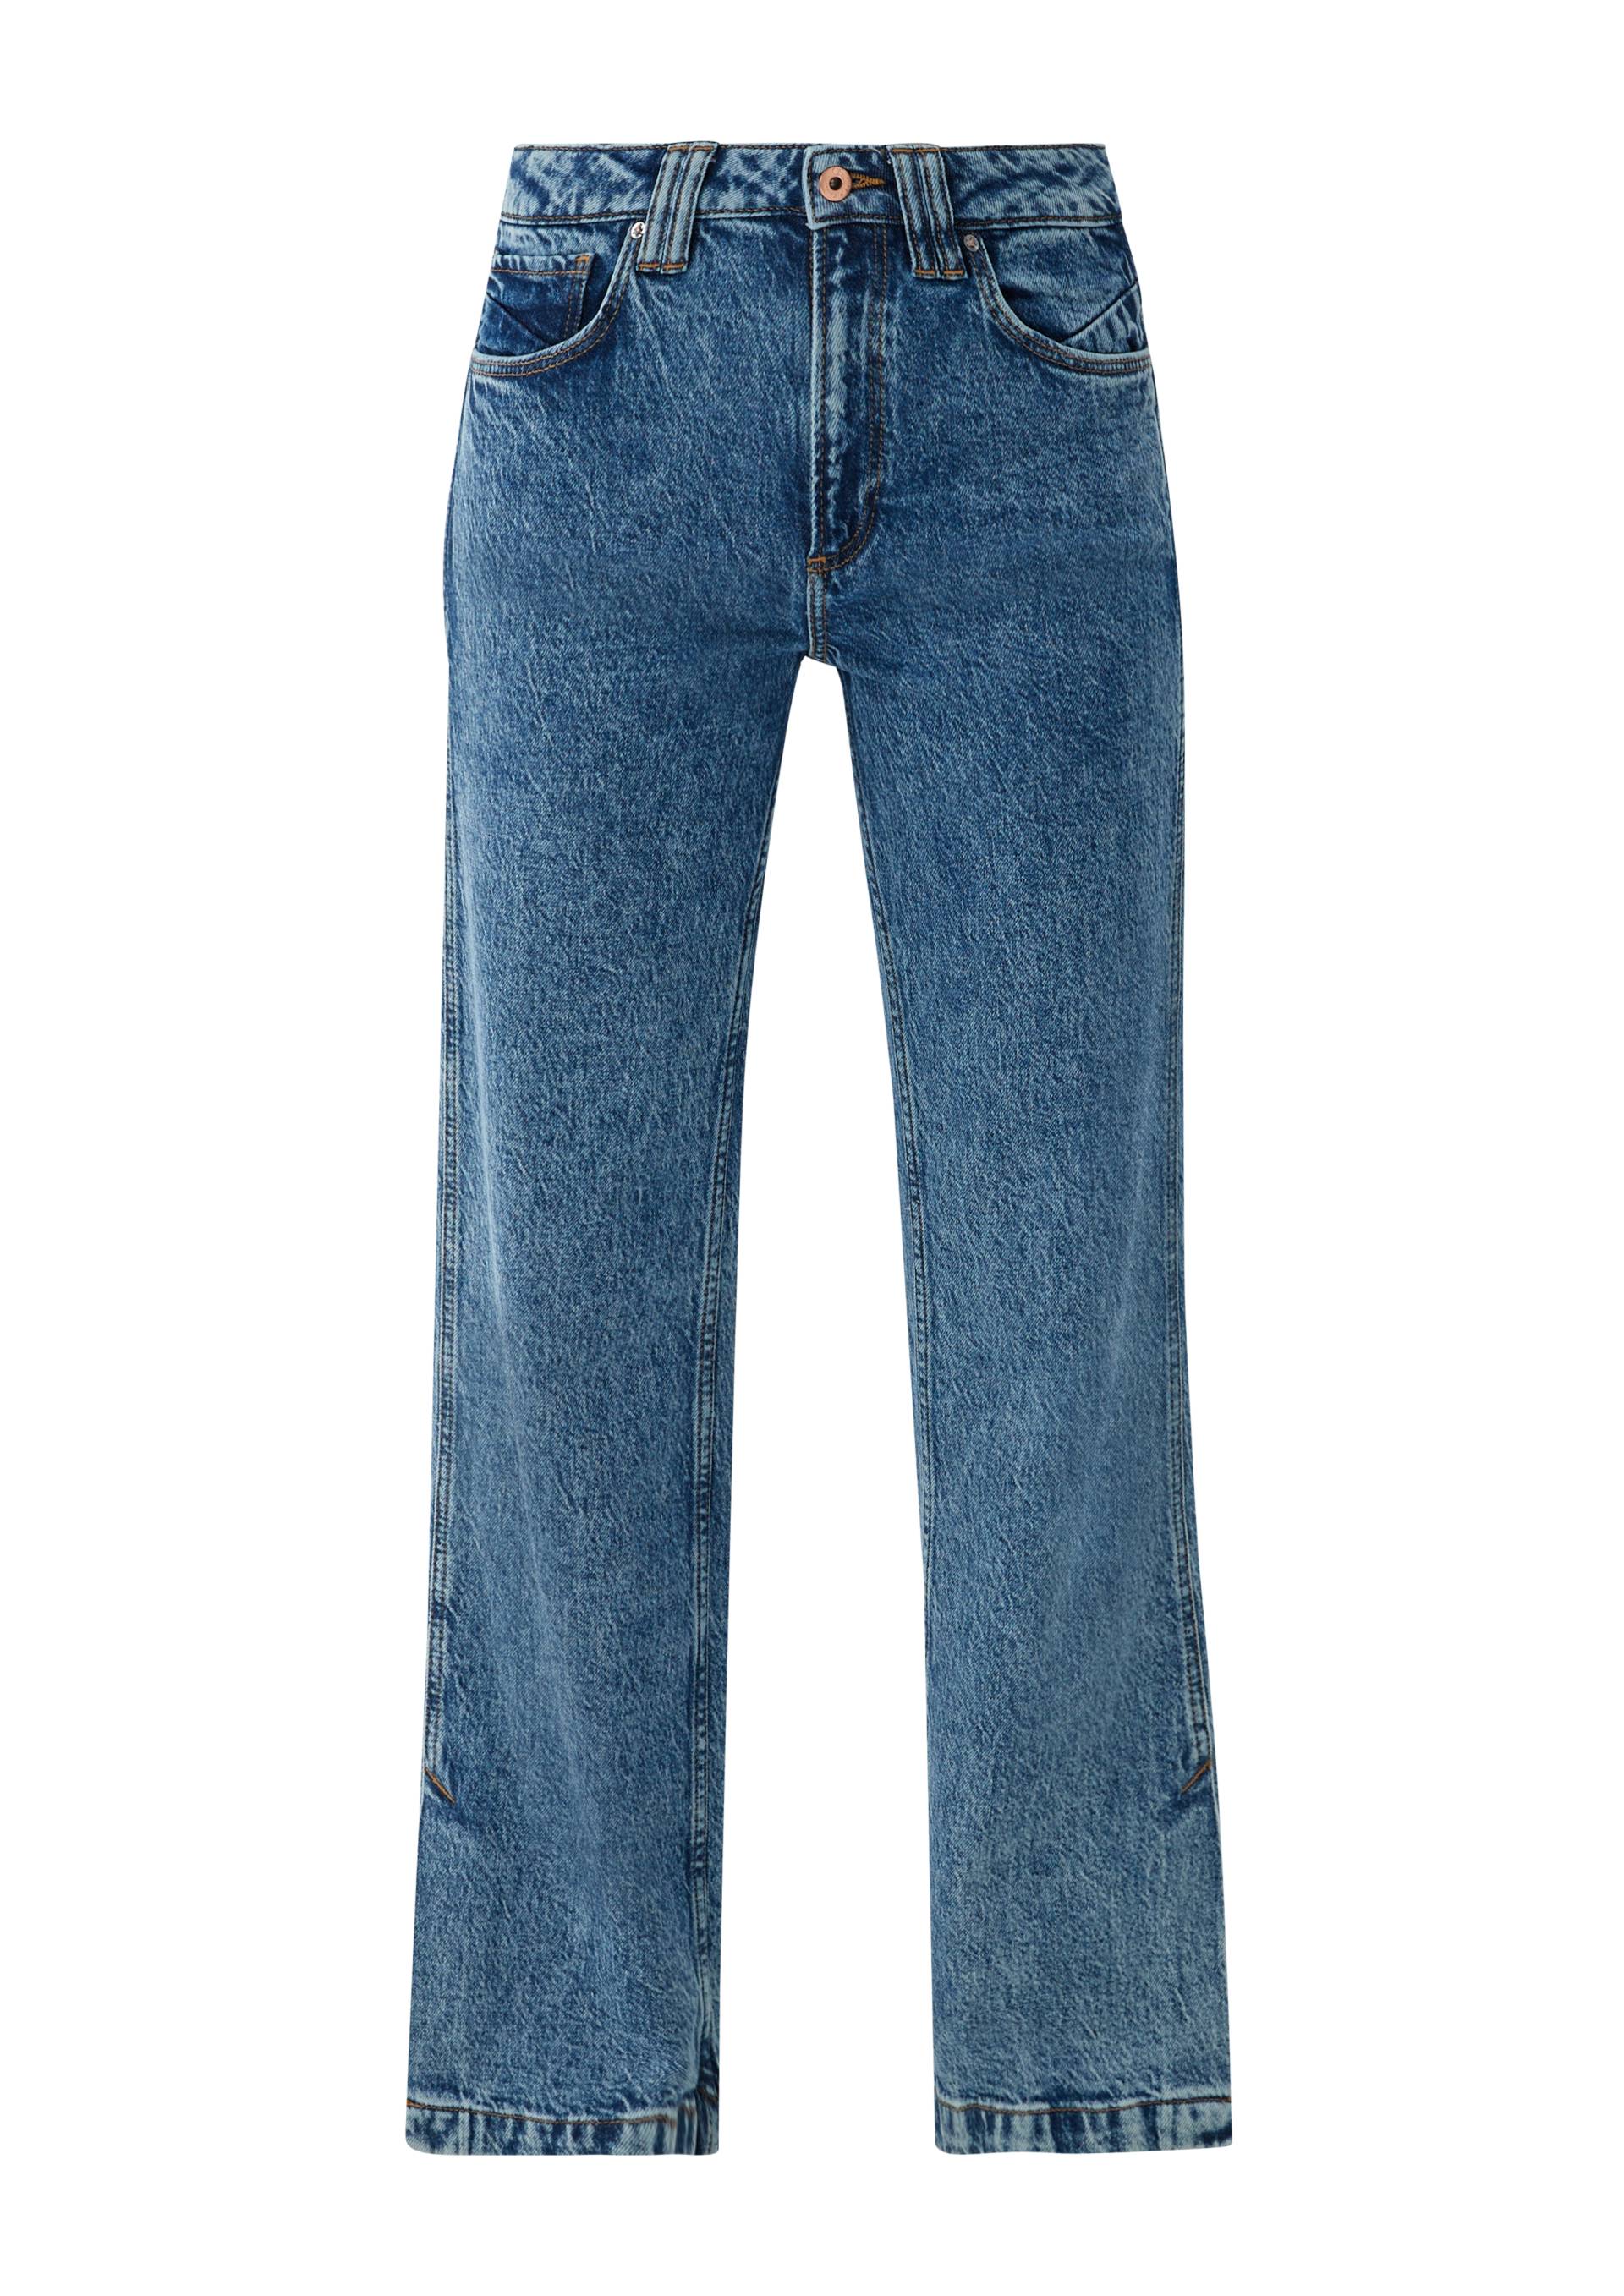 QS - Jeans Catie / Slim Fit / High Rise / Wide Leg, Damen, blau von QS